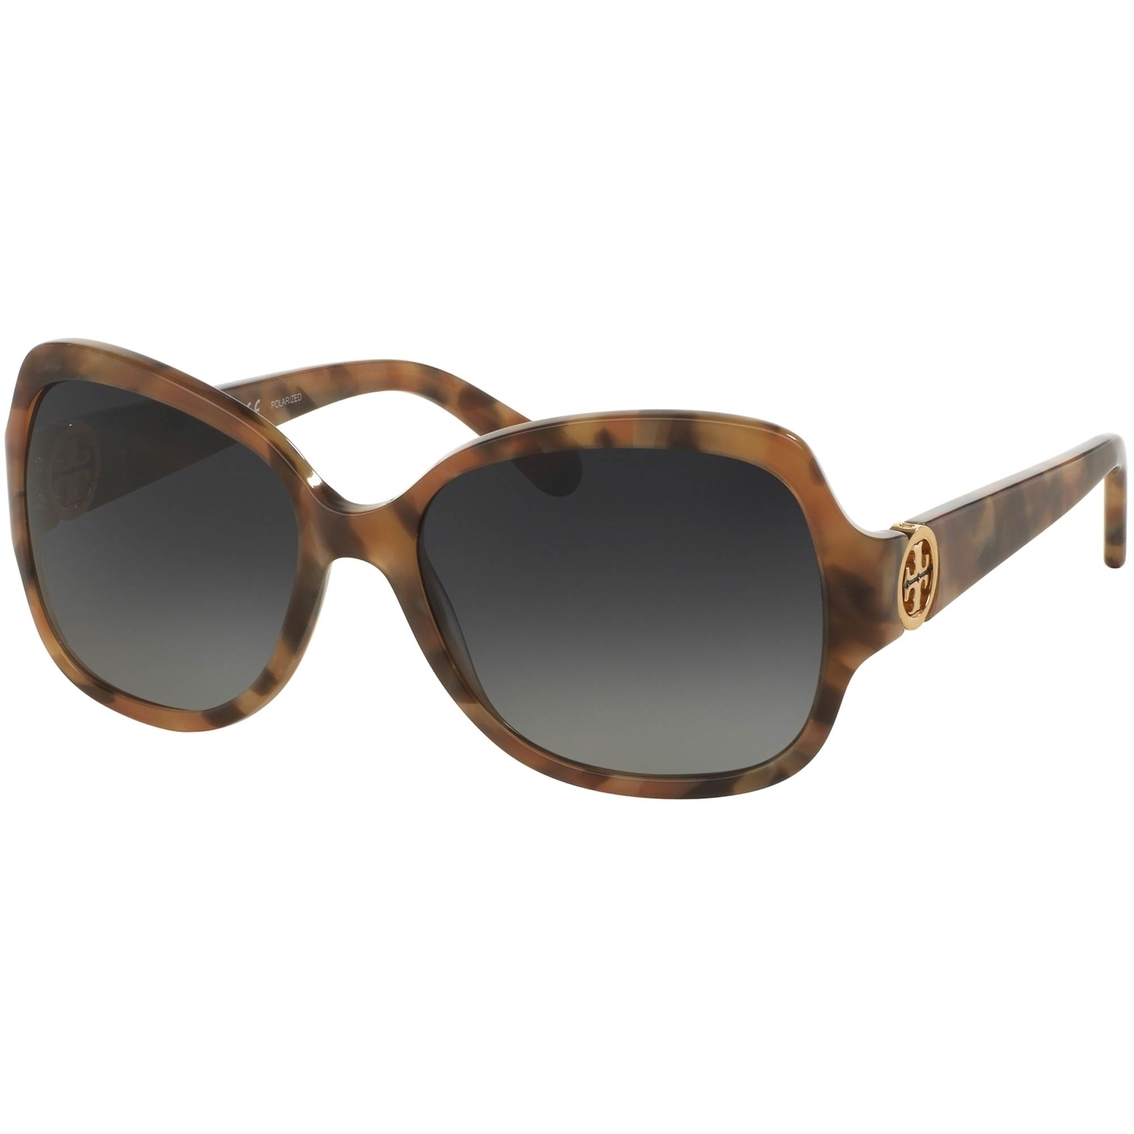 Tory Burch Square Sunglasses 0ty7059 | Women's Sunglasses | Clothing ...